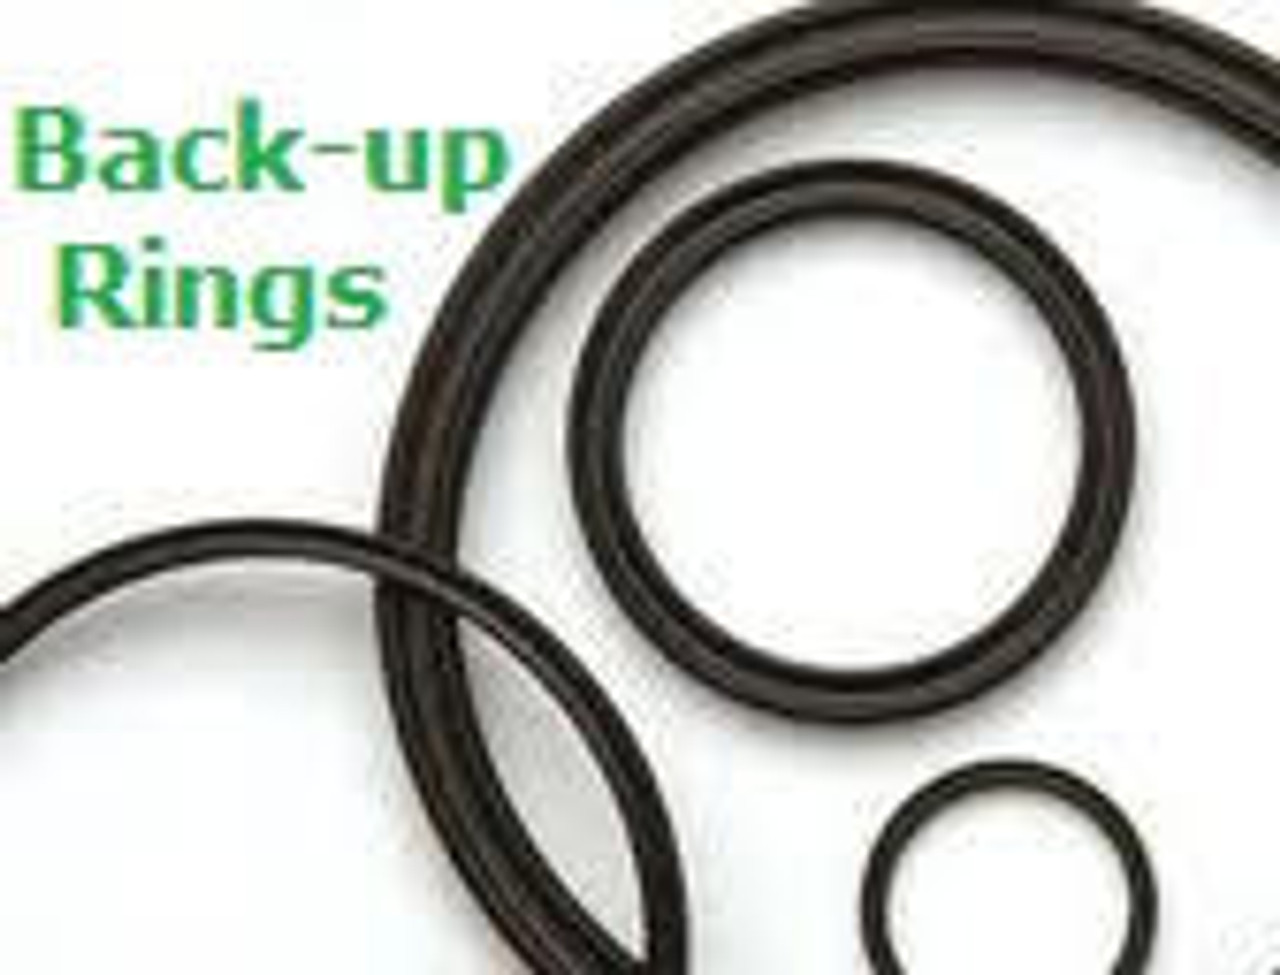 Backup Rings  Buna Size 234  Minimum 4 pcs